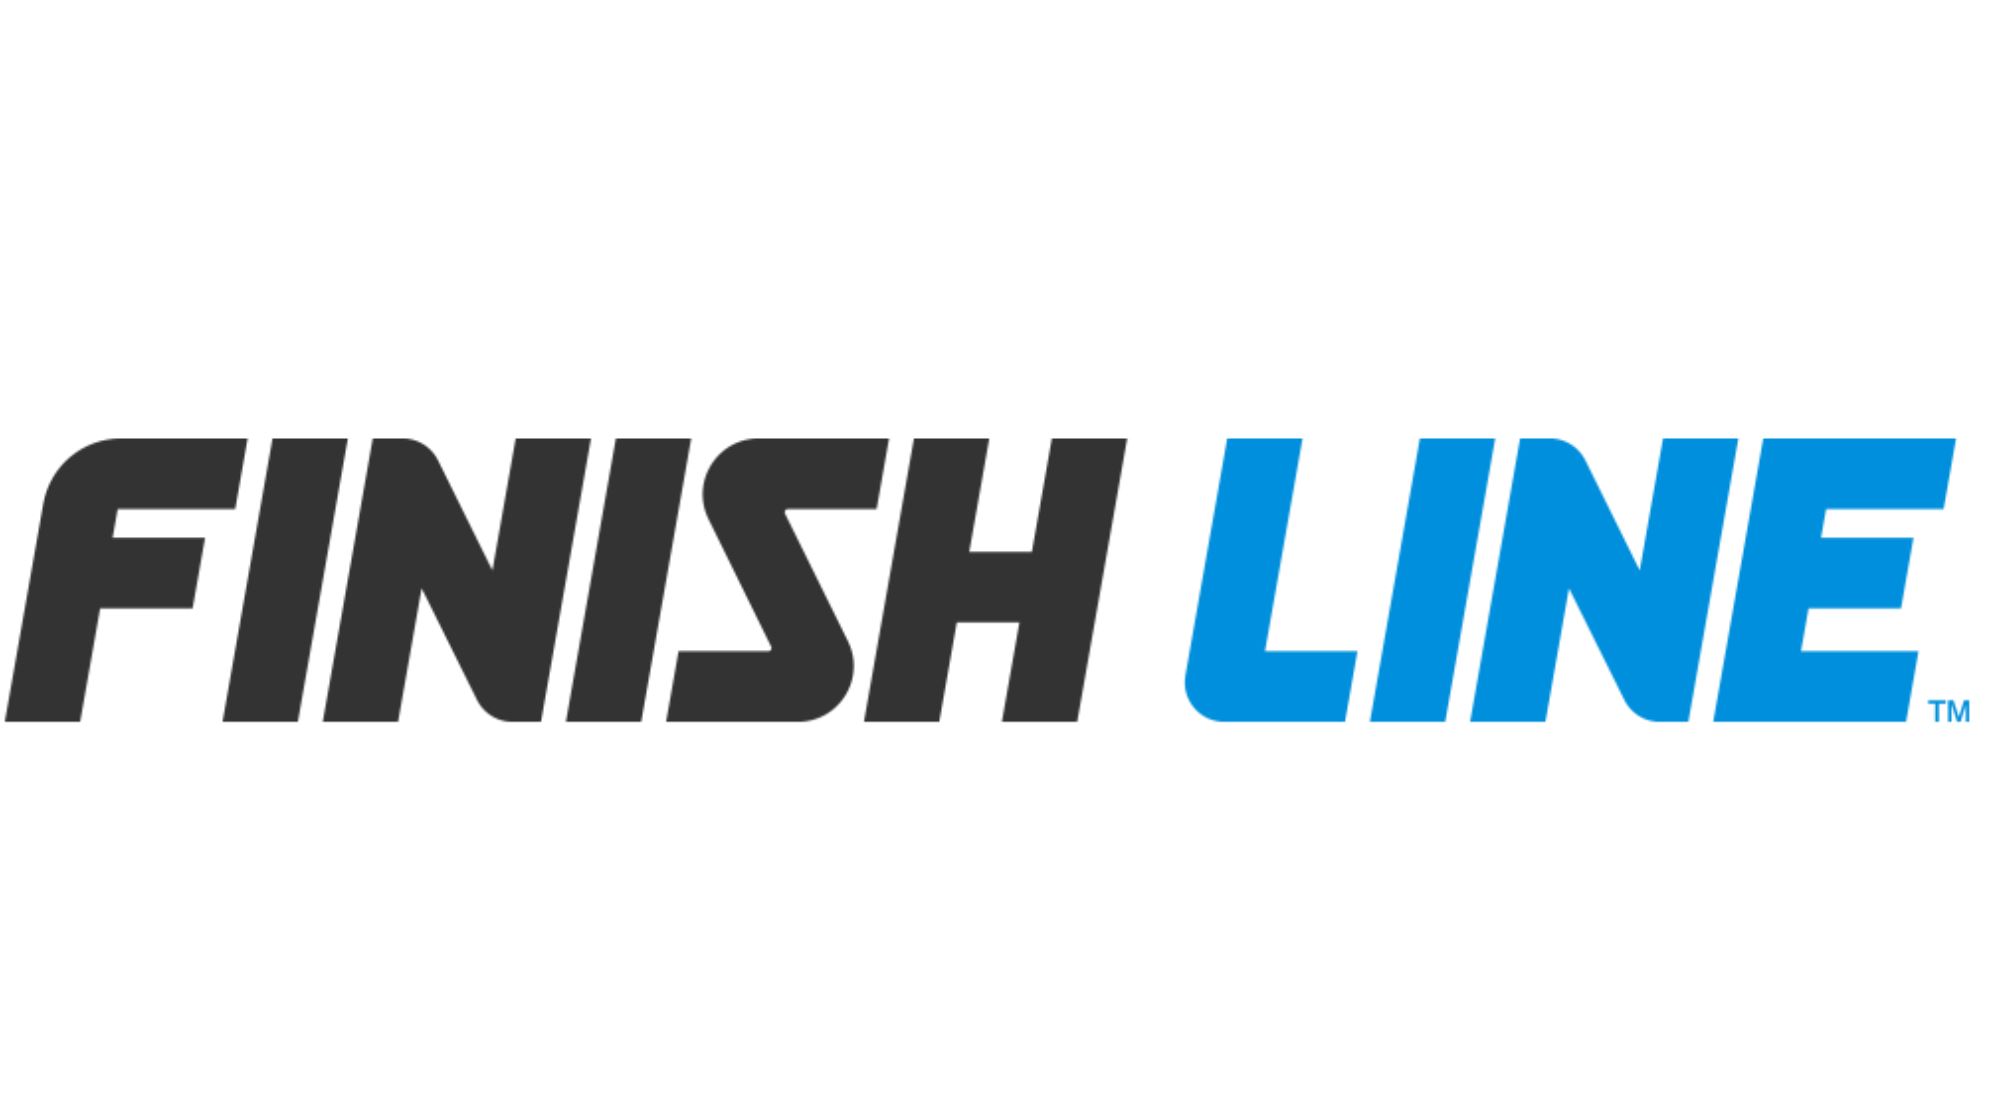 JD Sports Finish line logo